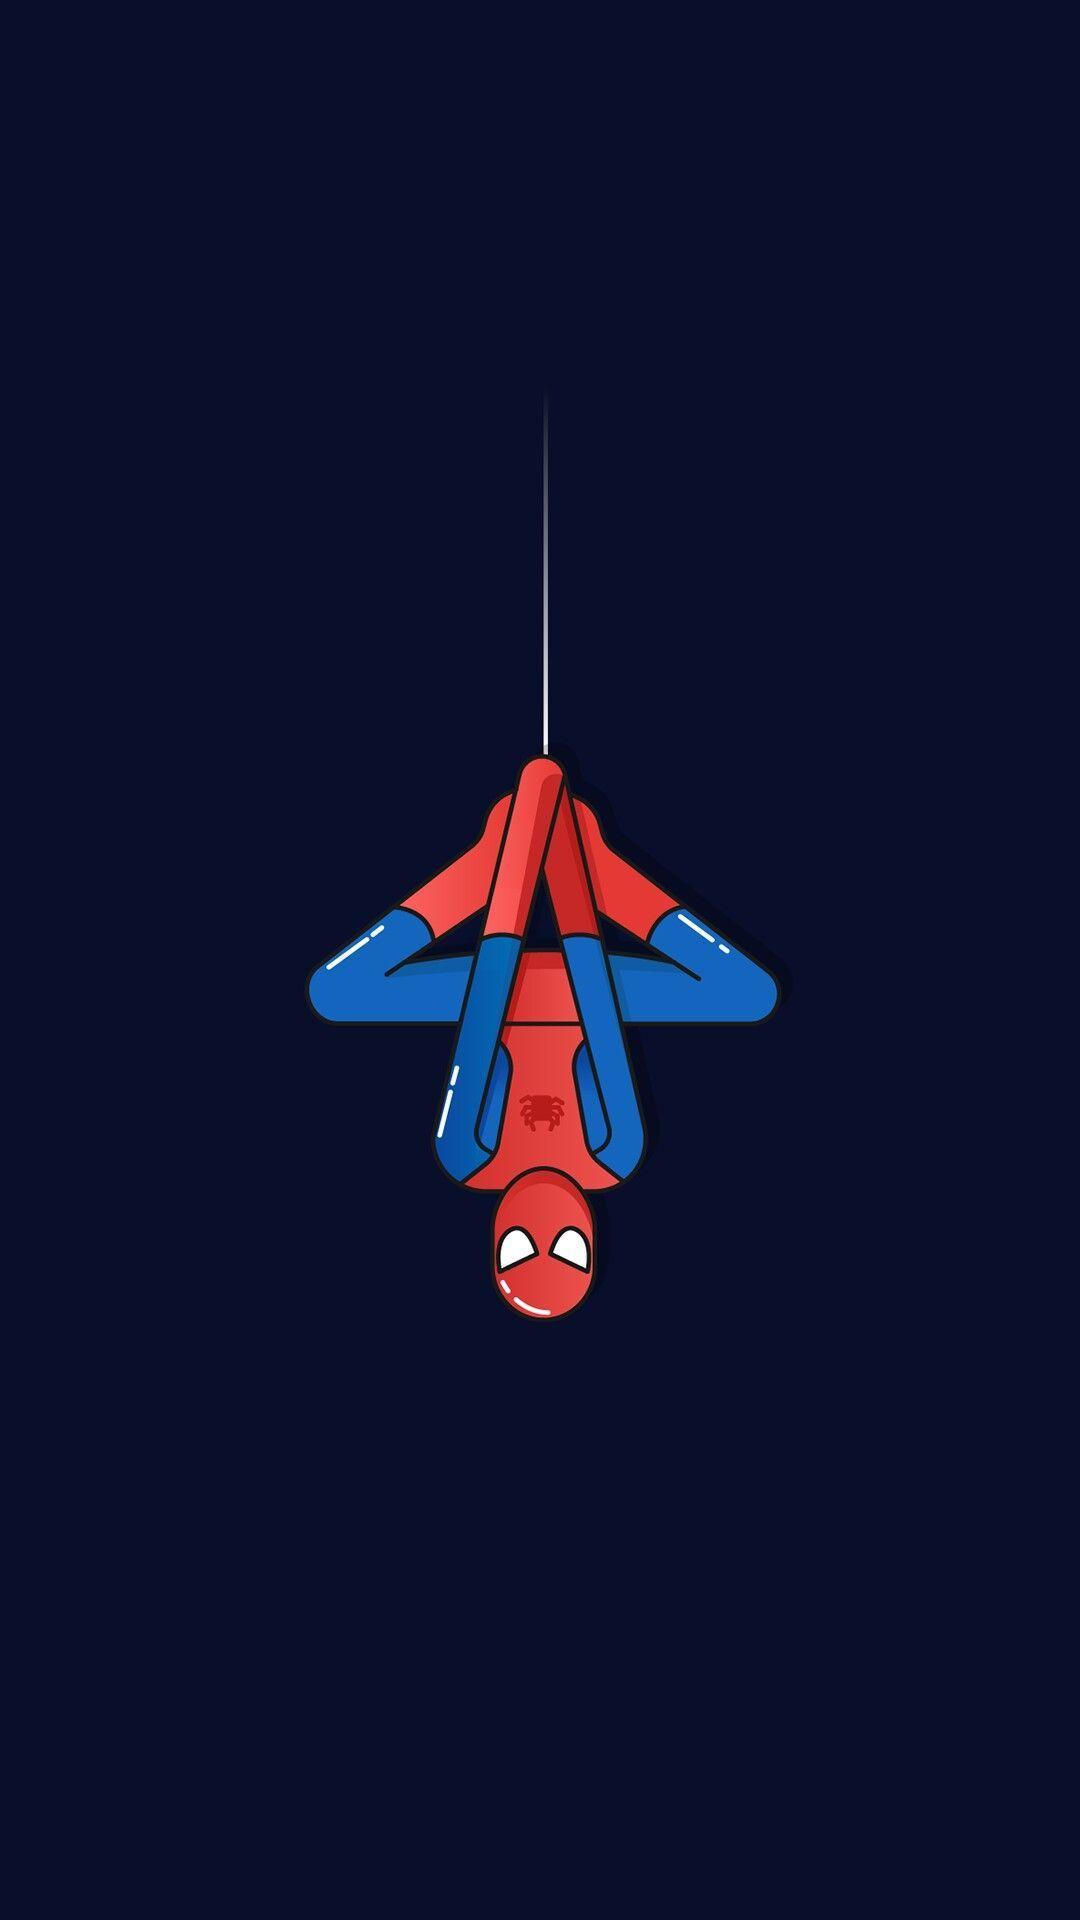 Spider Man Minimal iPhone Wallpaper. Marvel iphone wallpaper, Marvel wallpaper, Geeky wallpaper